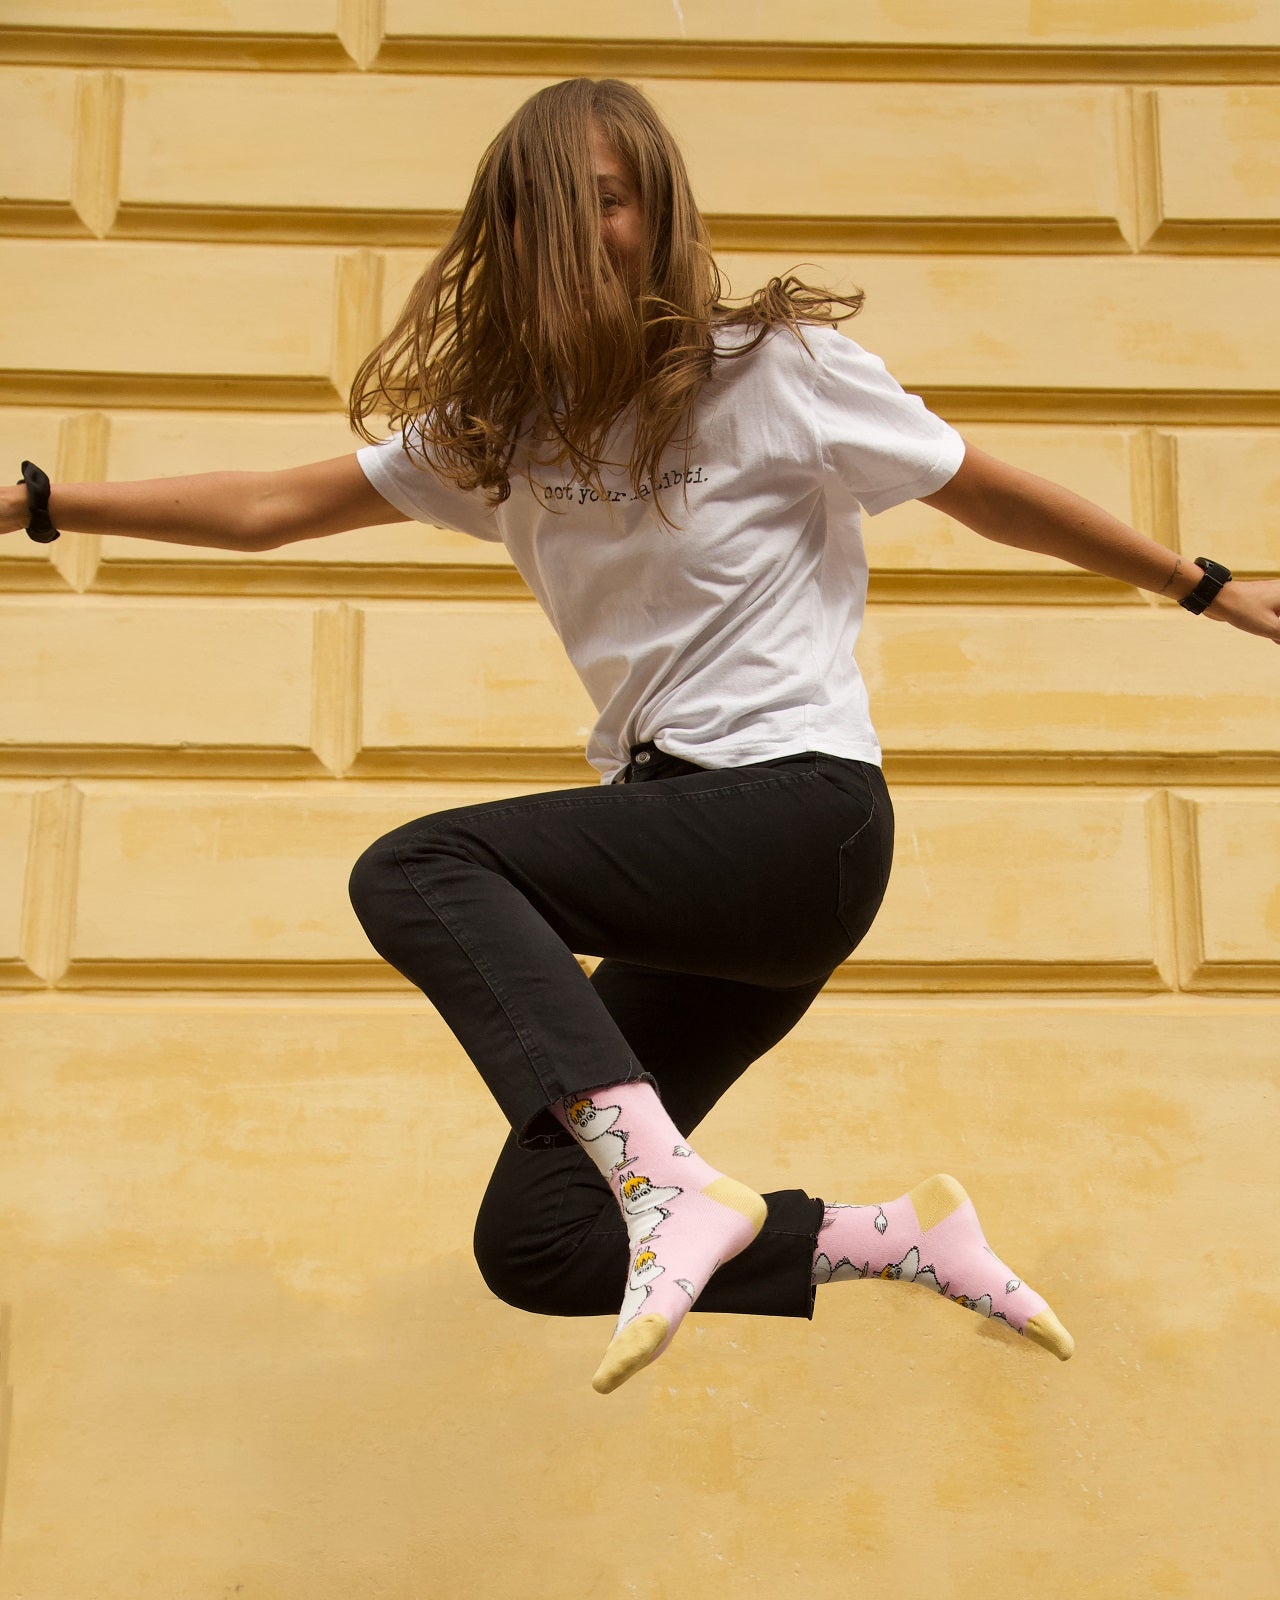 [Moomin] Snork Maiden Idea Women's Classic Socks Pink